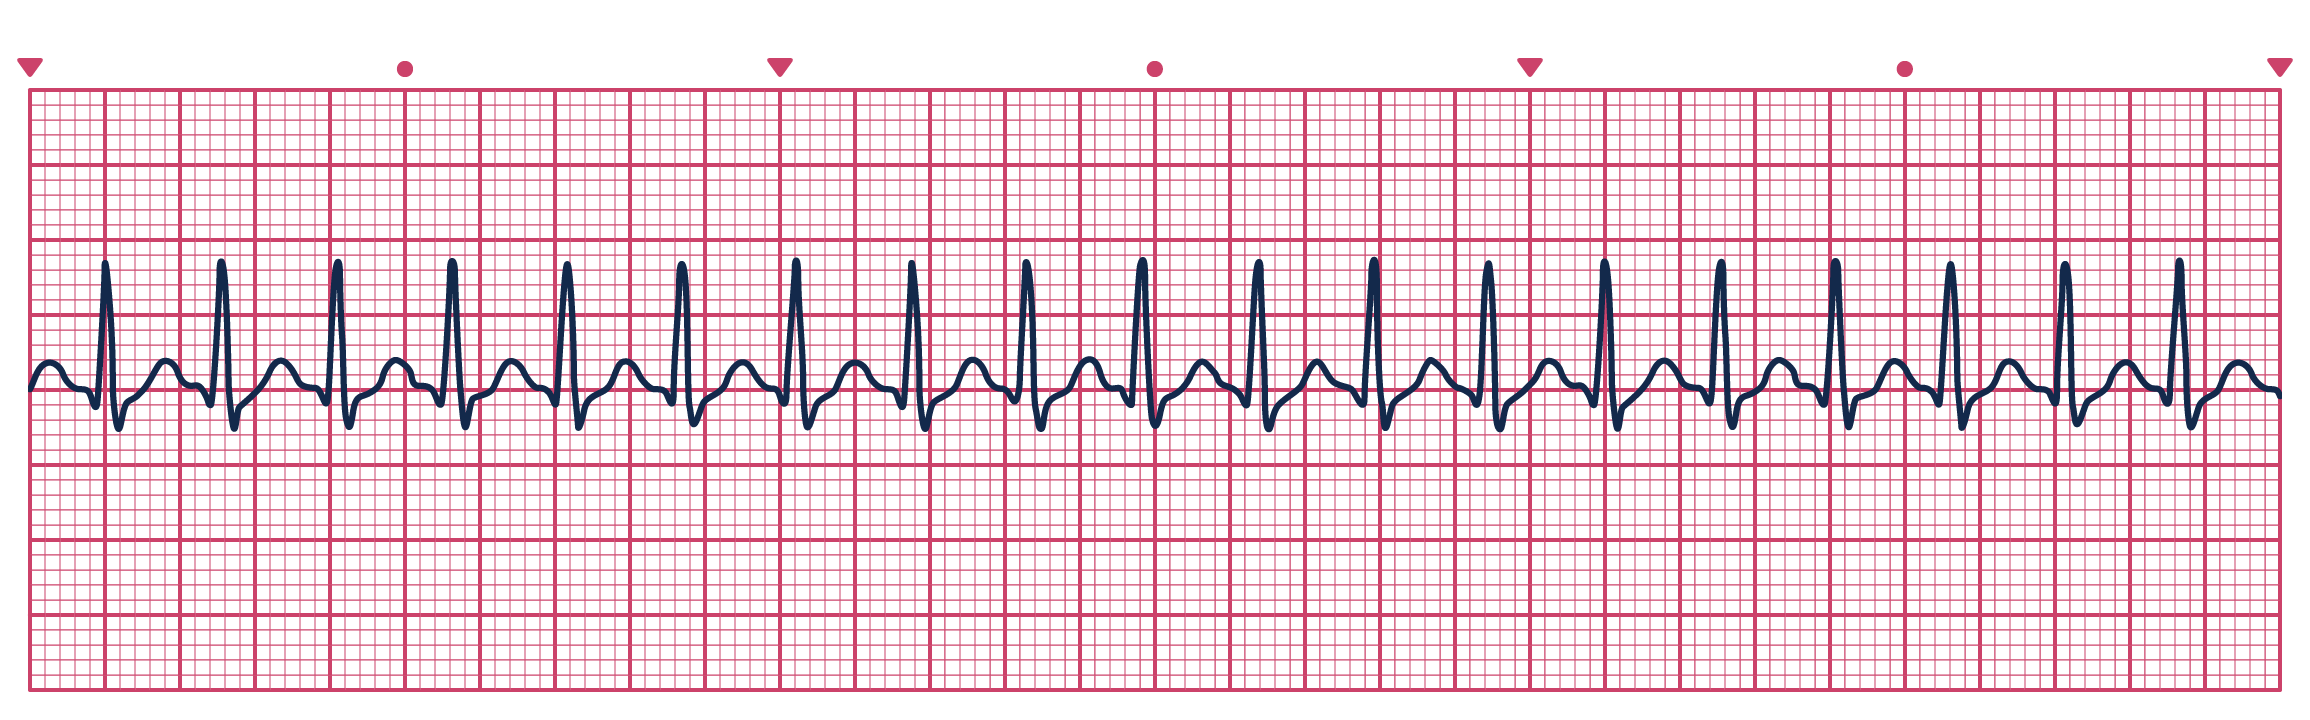 An ECG depicting Supraventricular Tachycardia